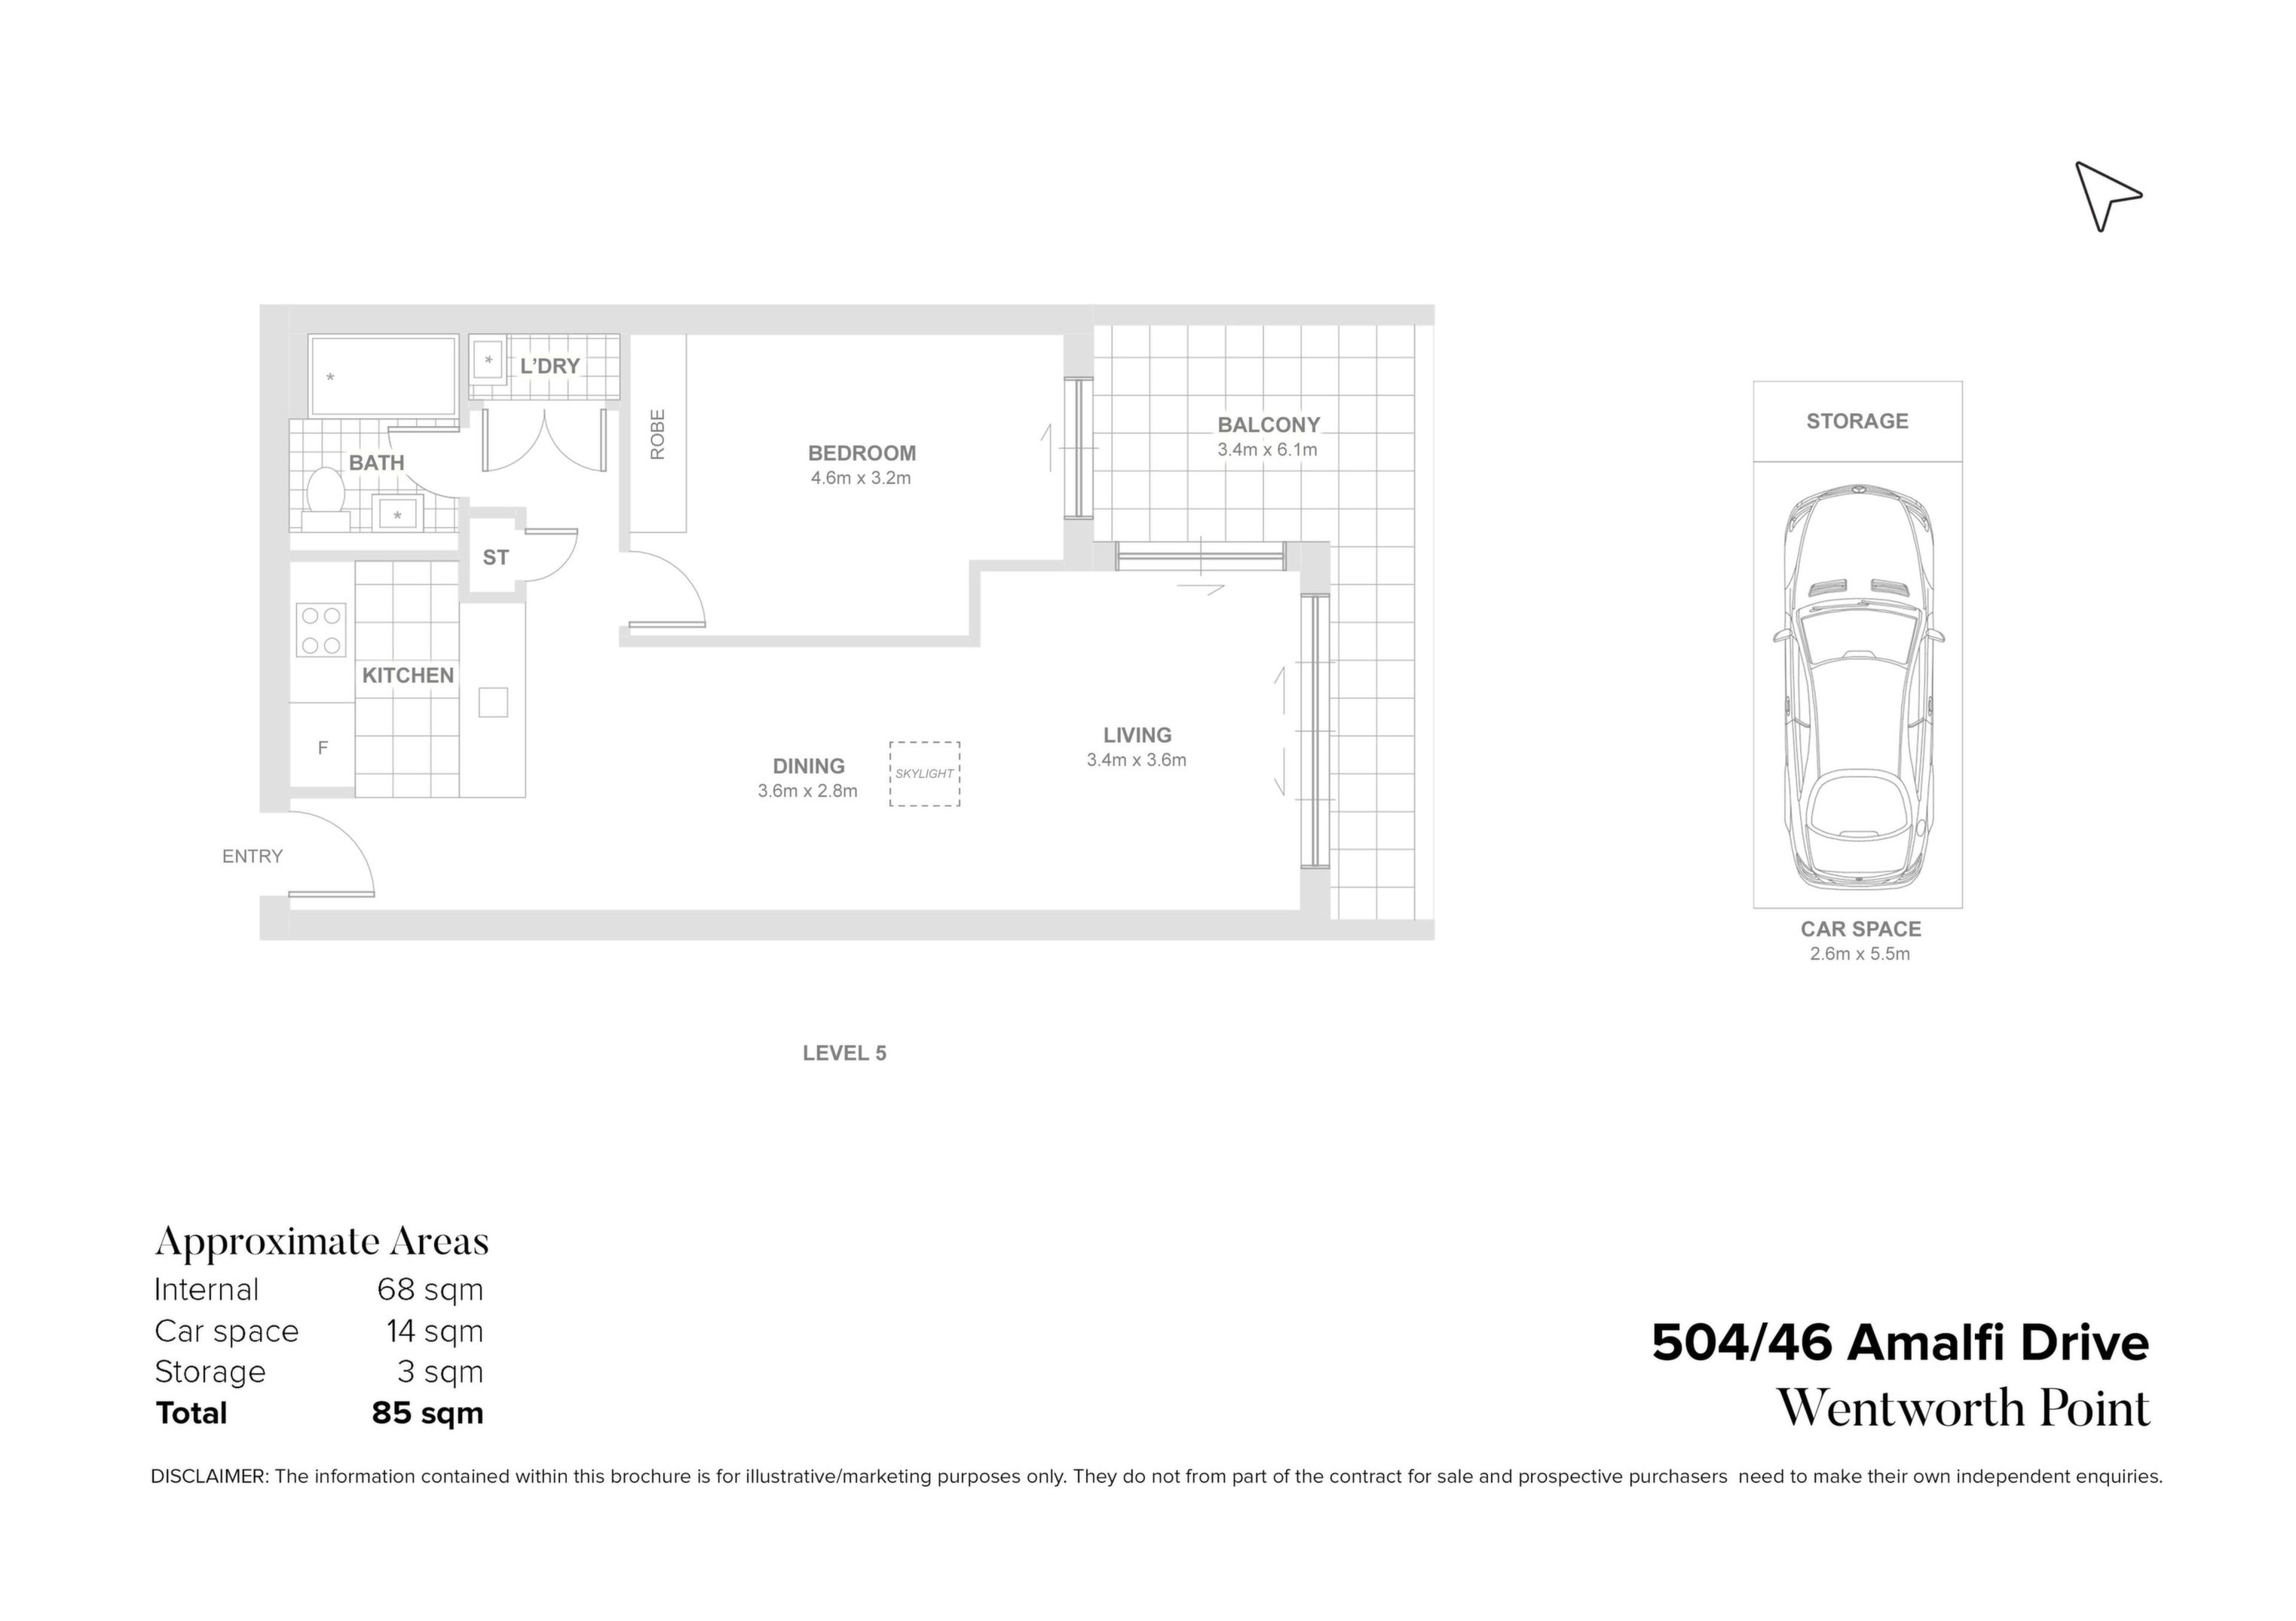 504/46 Amalfi Drive, Wentworth Point Sold by Chidiac Realty - floorplan